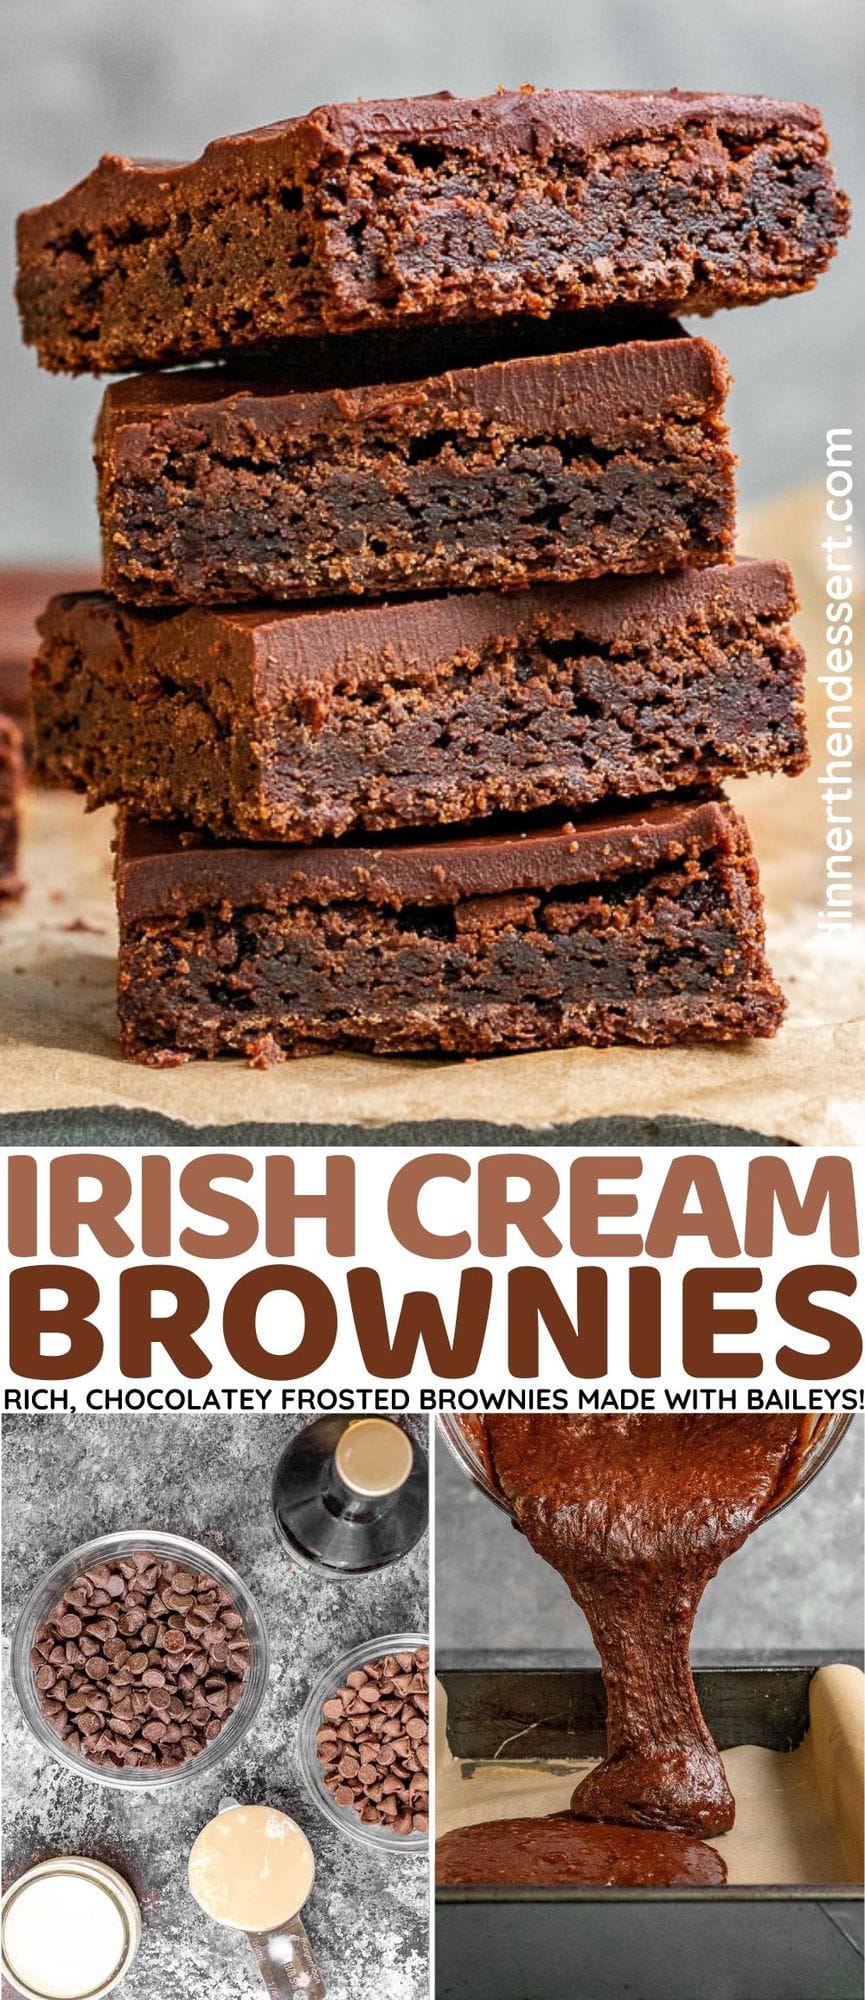 Irish Cream Brownies collage